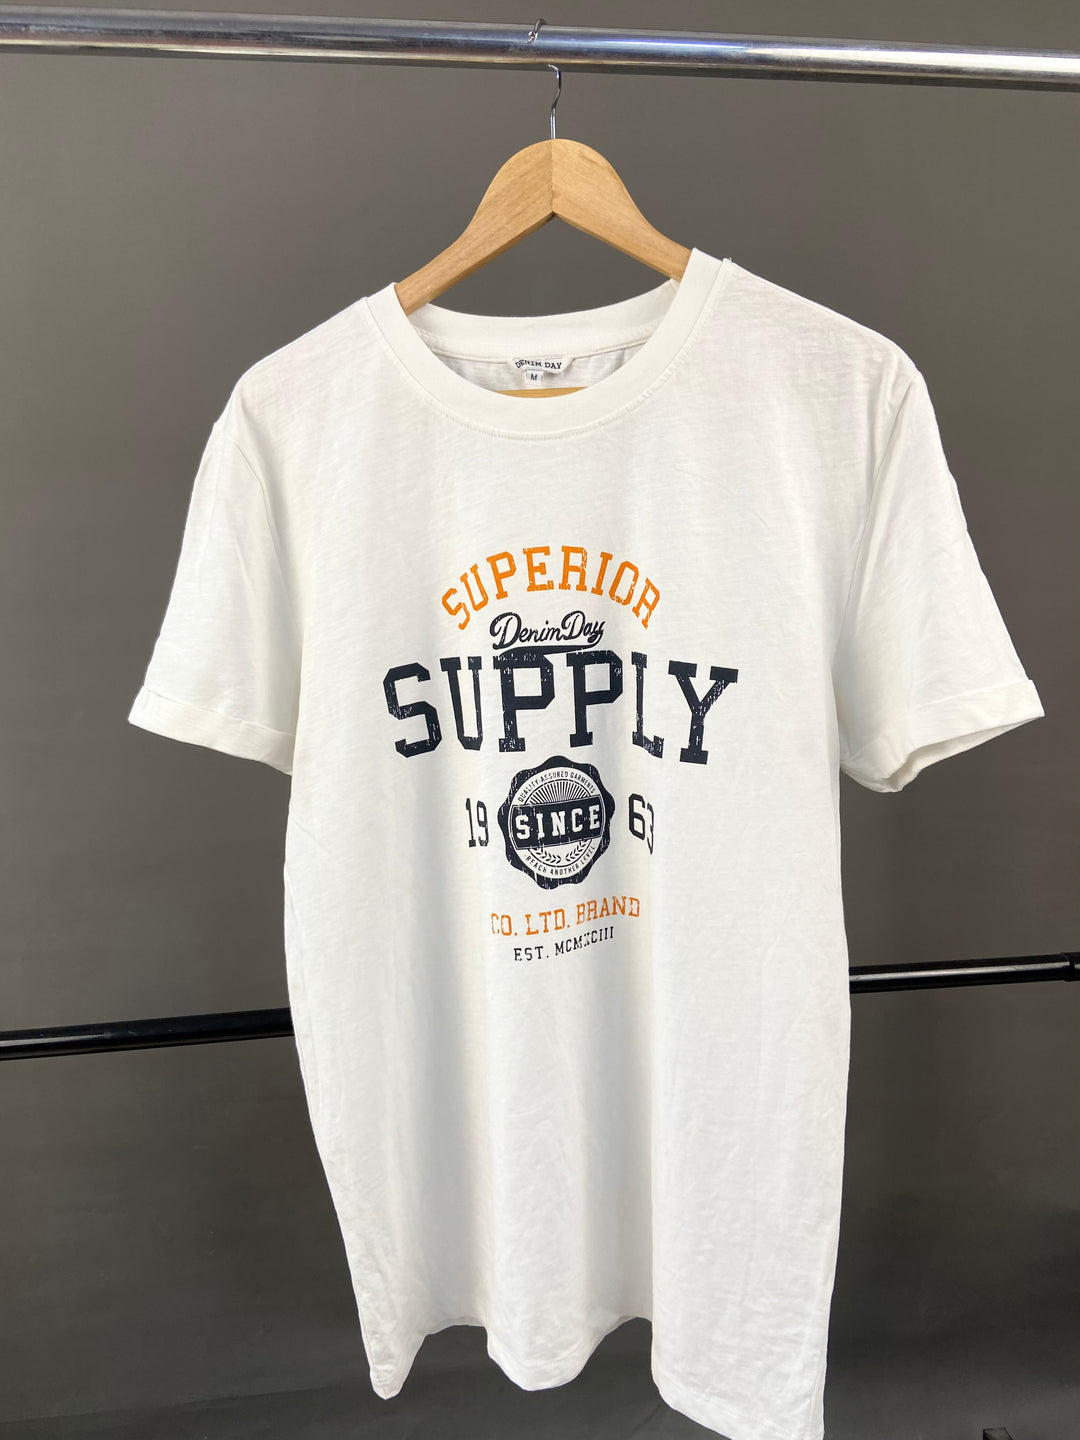 Denim day supply t-shirt